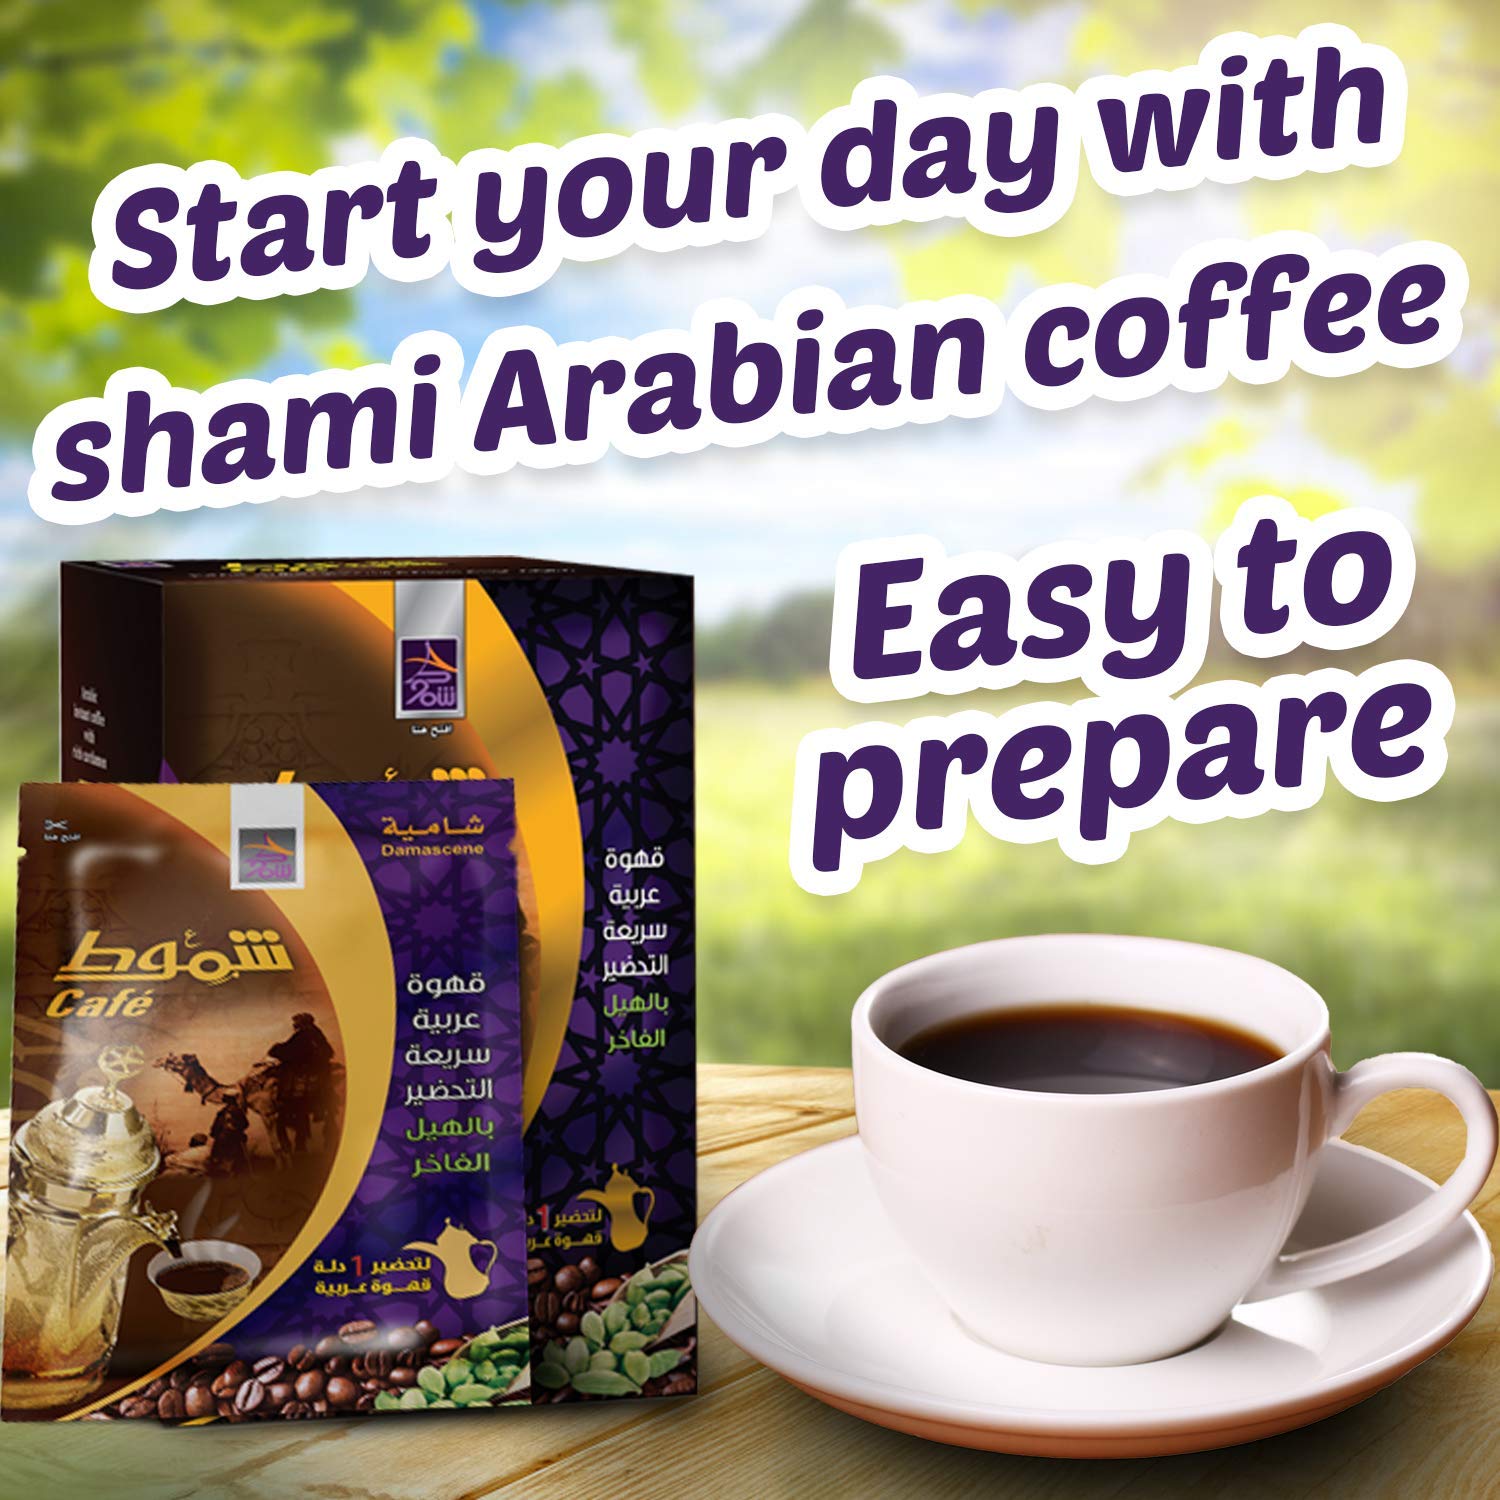 Coffee arabic shammout / قهوه شموط شاميه damascene arabic coffee rich with luxurious roasted cardamom / 10 pcs inside the box / 220gm(0.48lb)